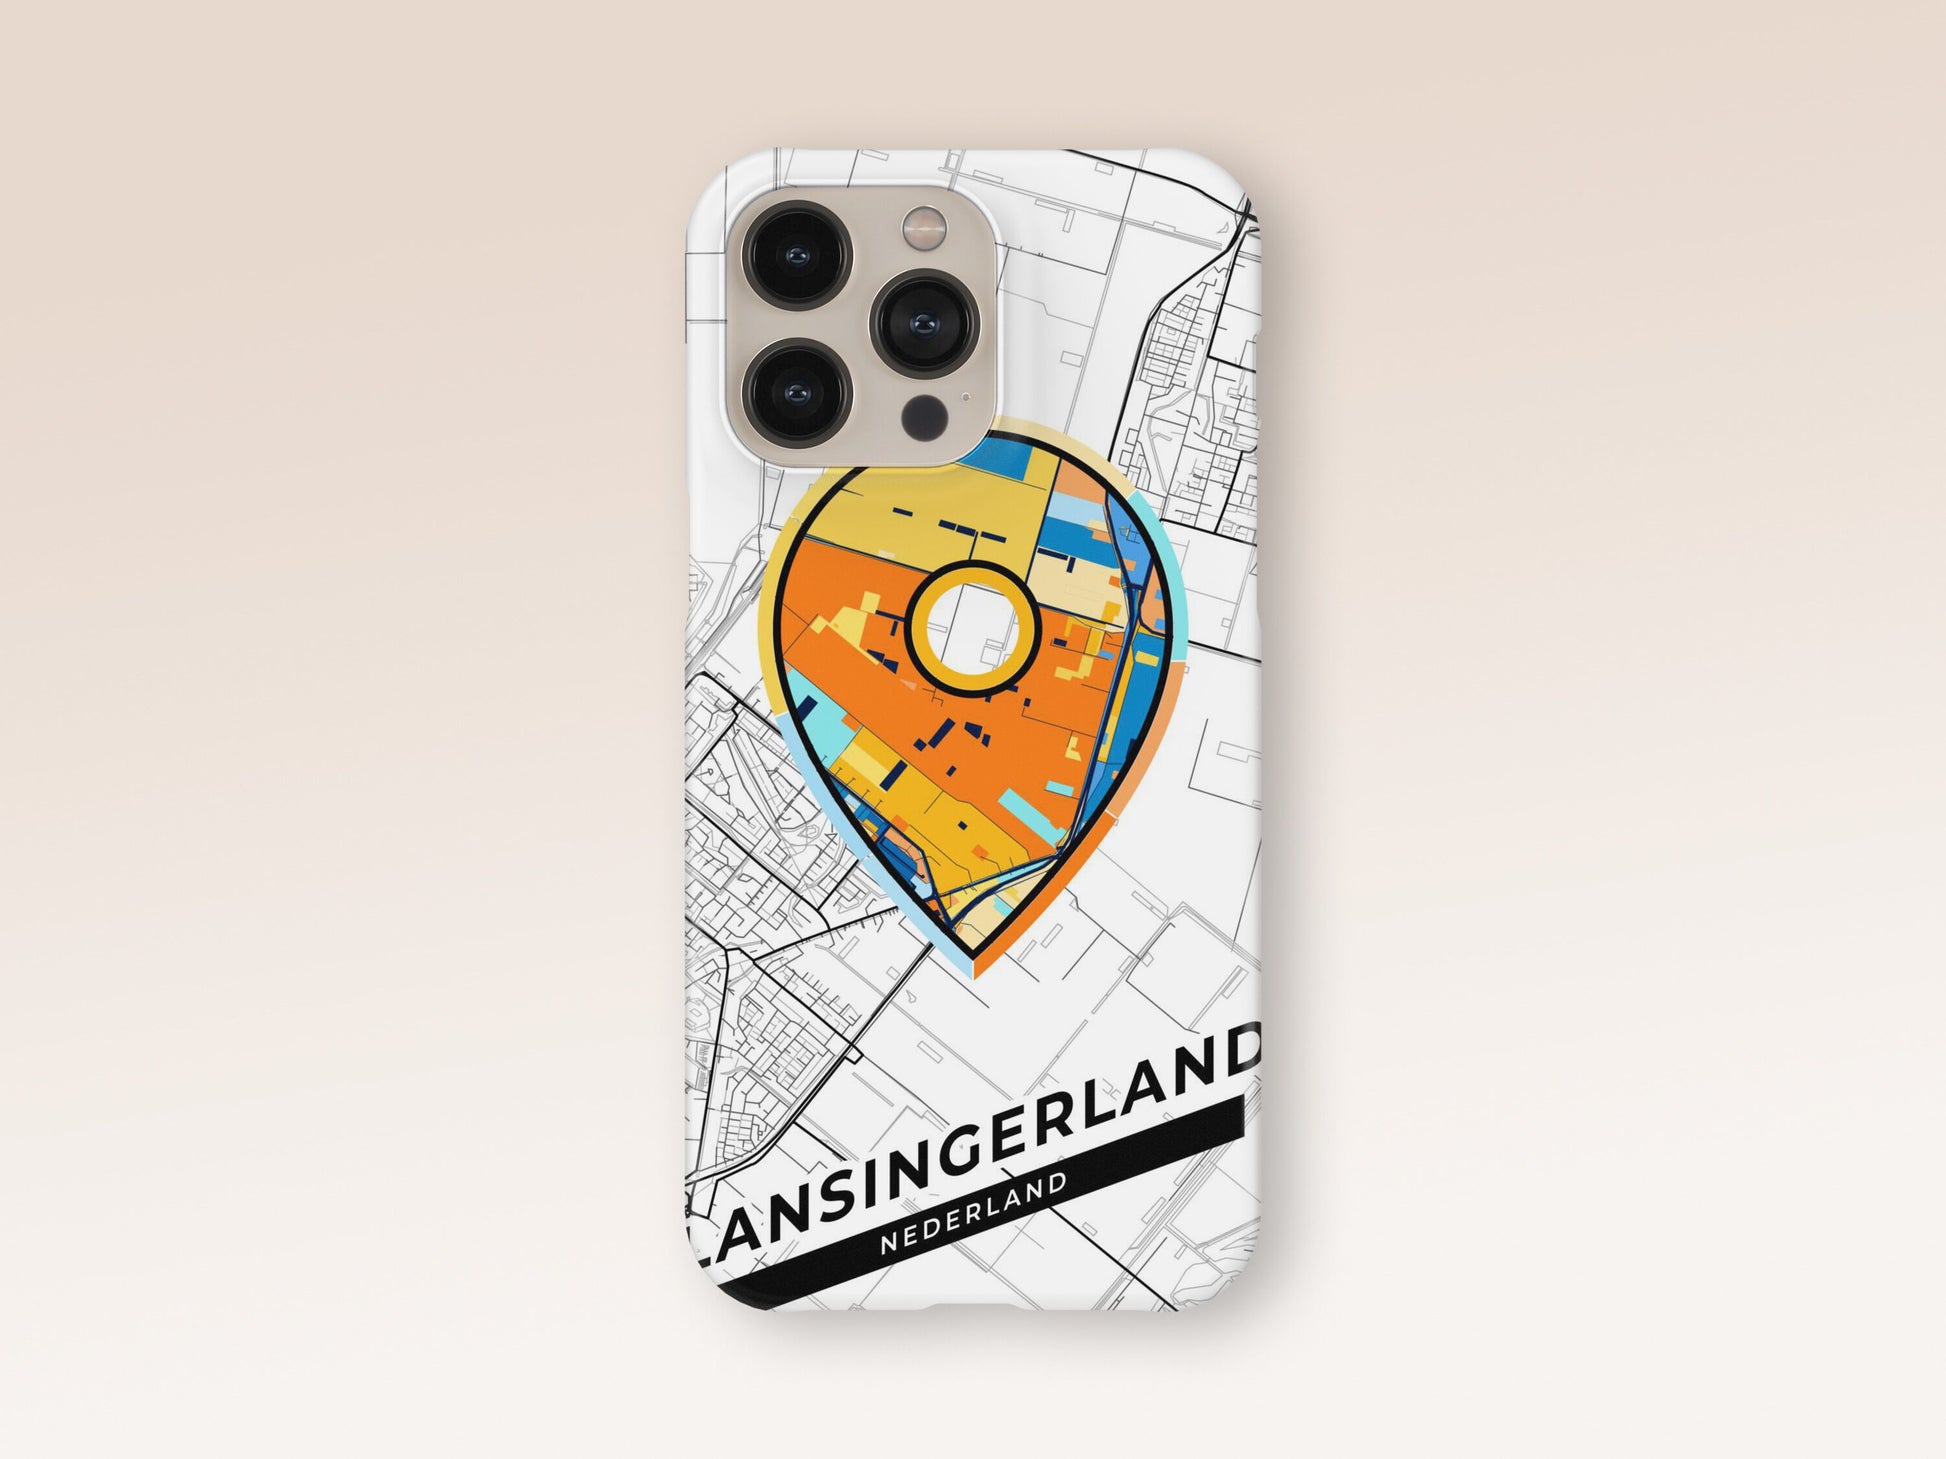 Lansingerland Netherlands slim phone case with colorful icon. Birthday, wedding or housewarming gift. Couple match cases. 1